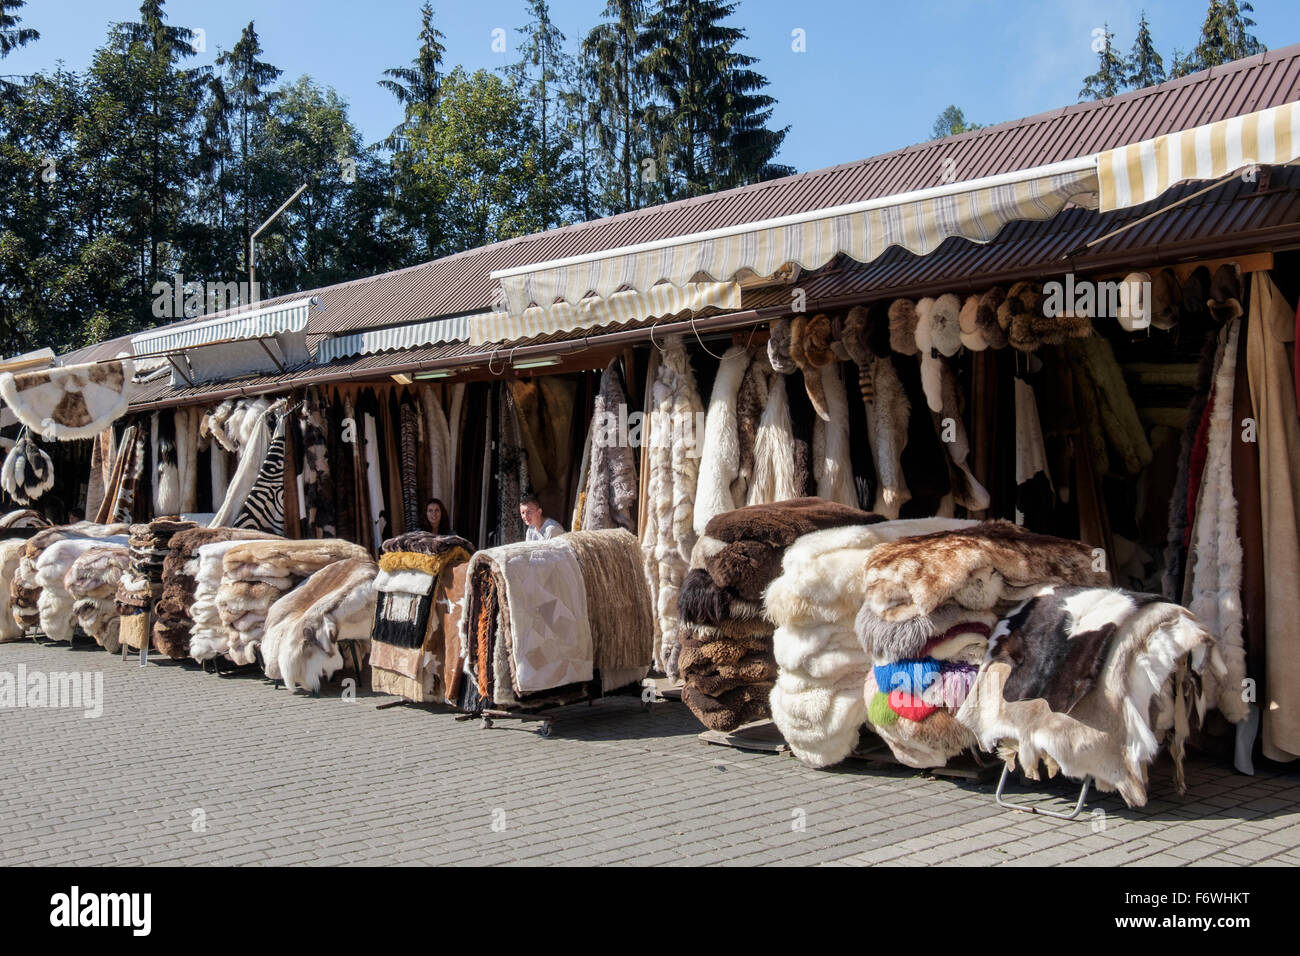 Marktstand verkaufen Pelze und Felle. Tatra County Krupowki Straße, Zakopane, Polen, Europa Stockfoto